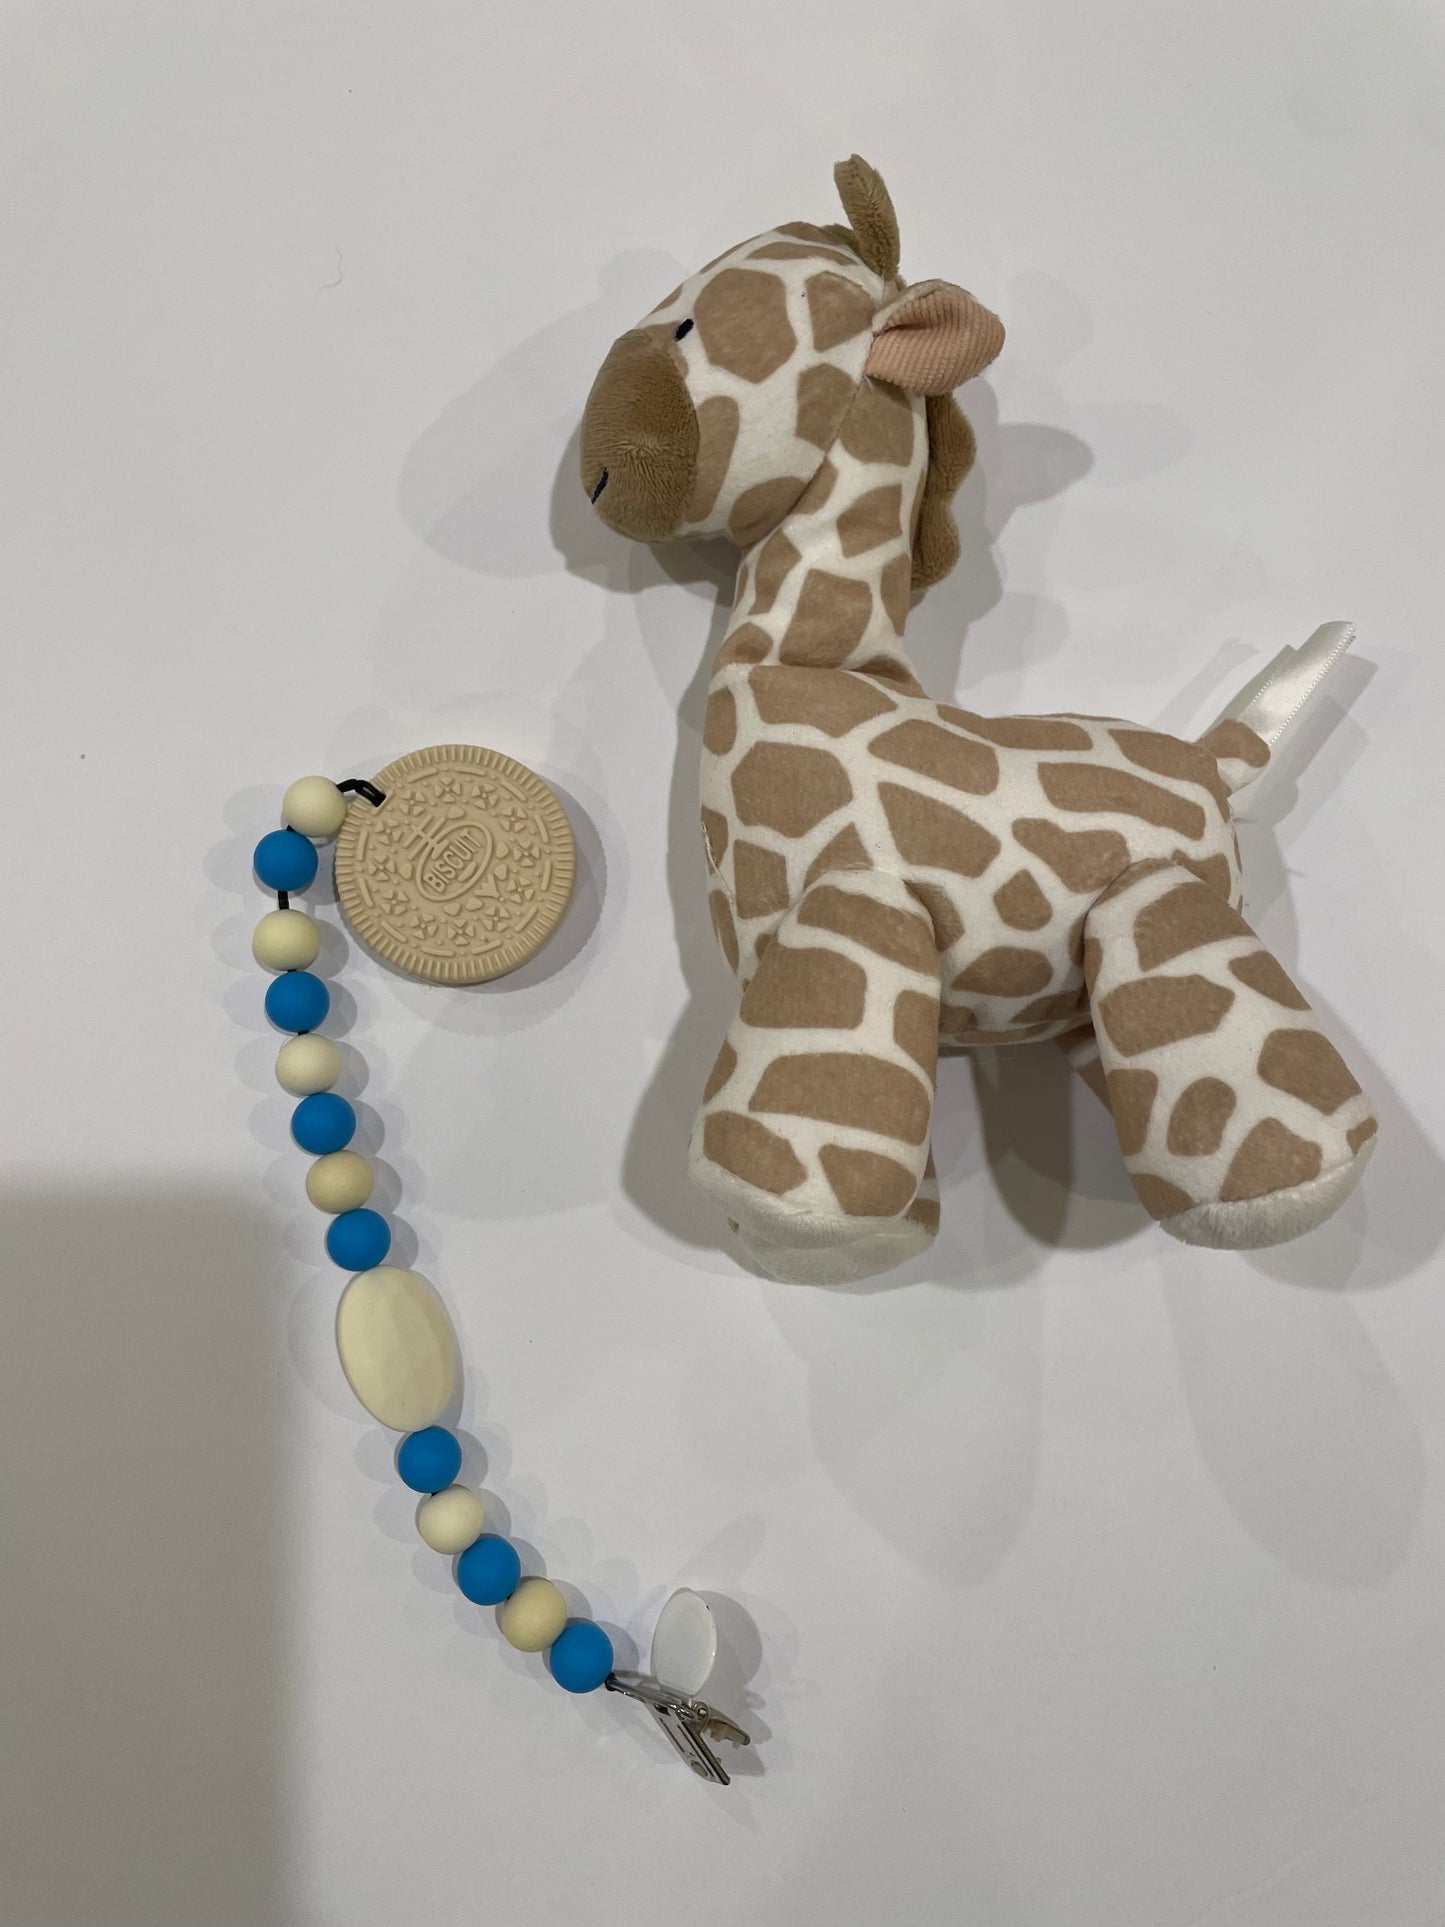 oreo teether toy and giraffe stuffed animal